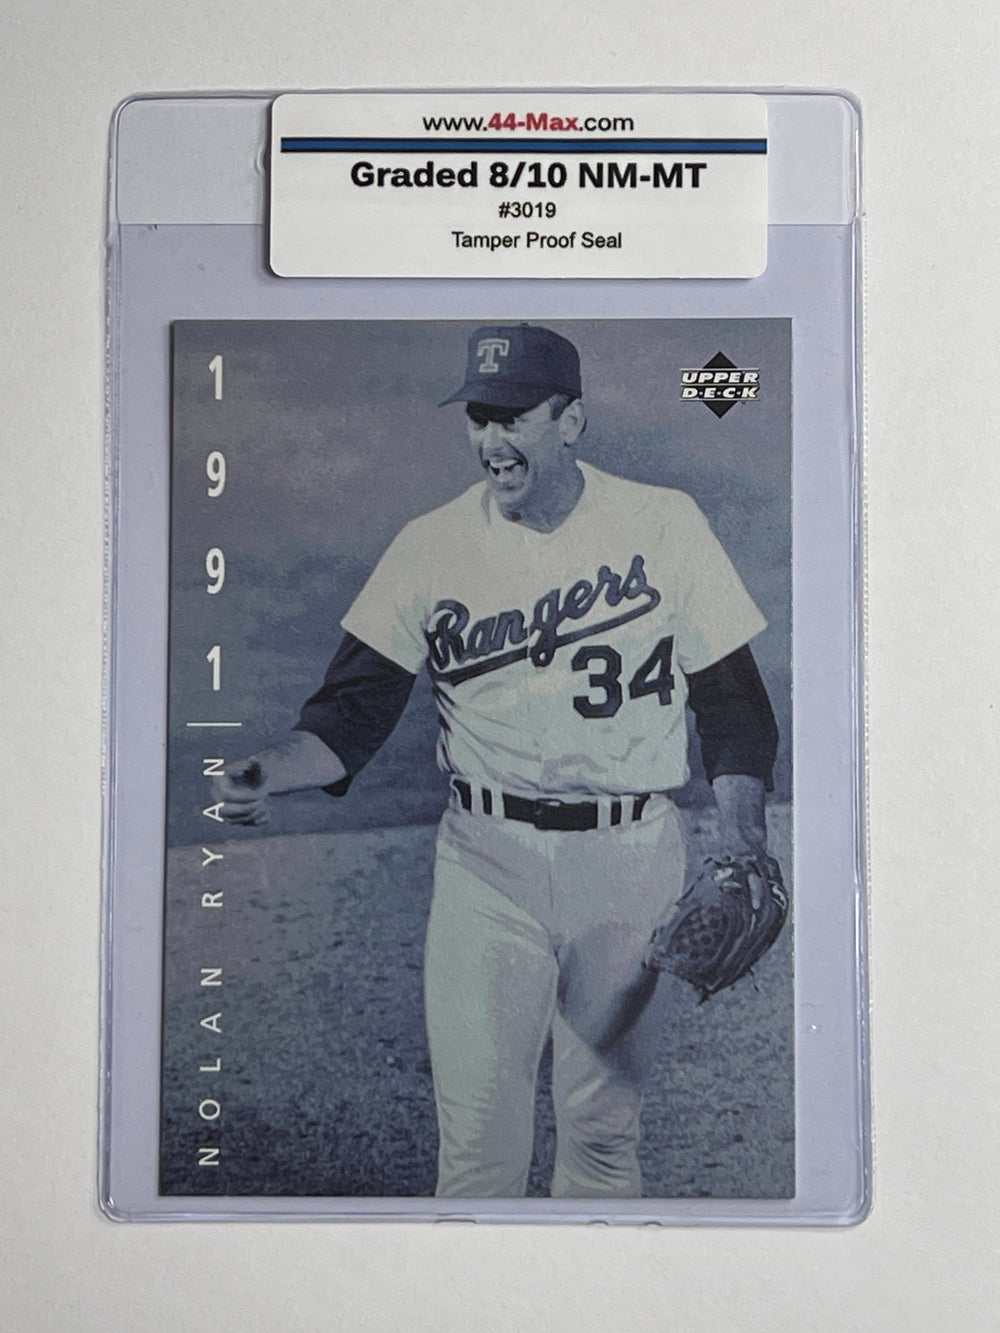 Nolan Ryan 1994 UD Baseball Card. 44-Max 8/10 NM-MT #3019